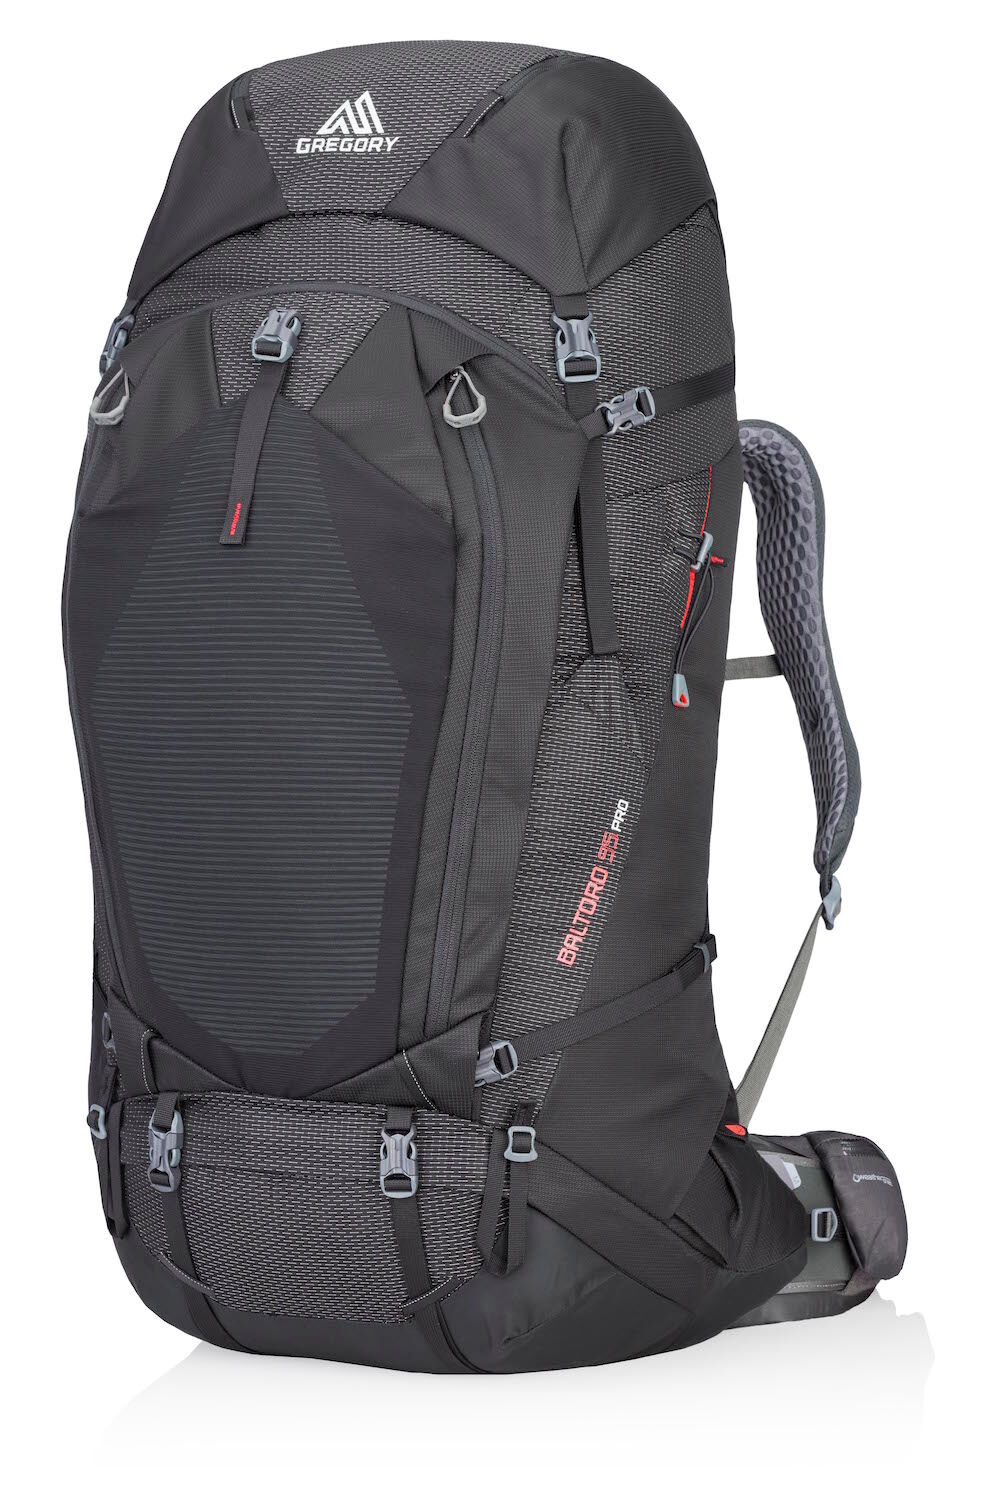 Gregory Baltoro 95 Pro - Hiking backpack - Men's